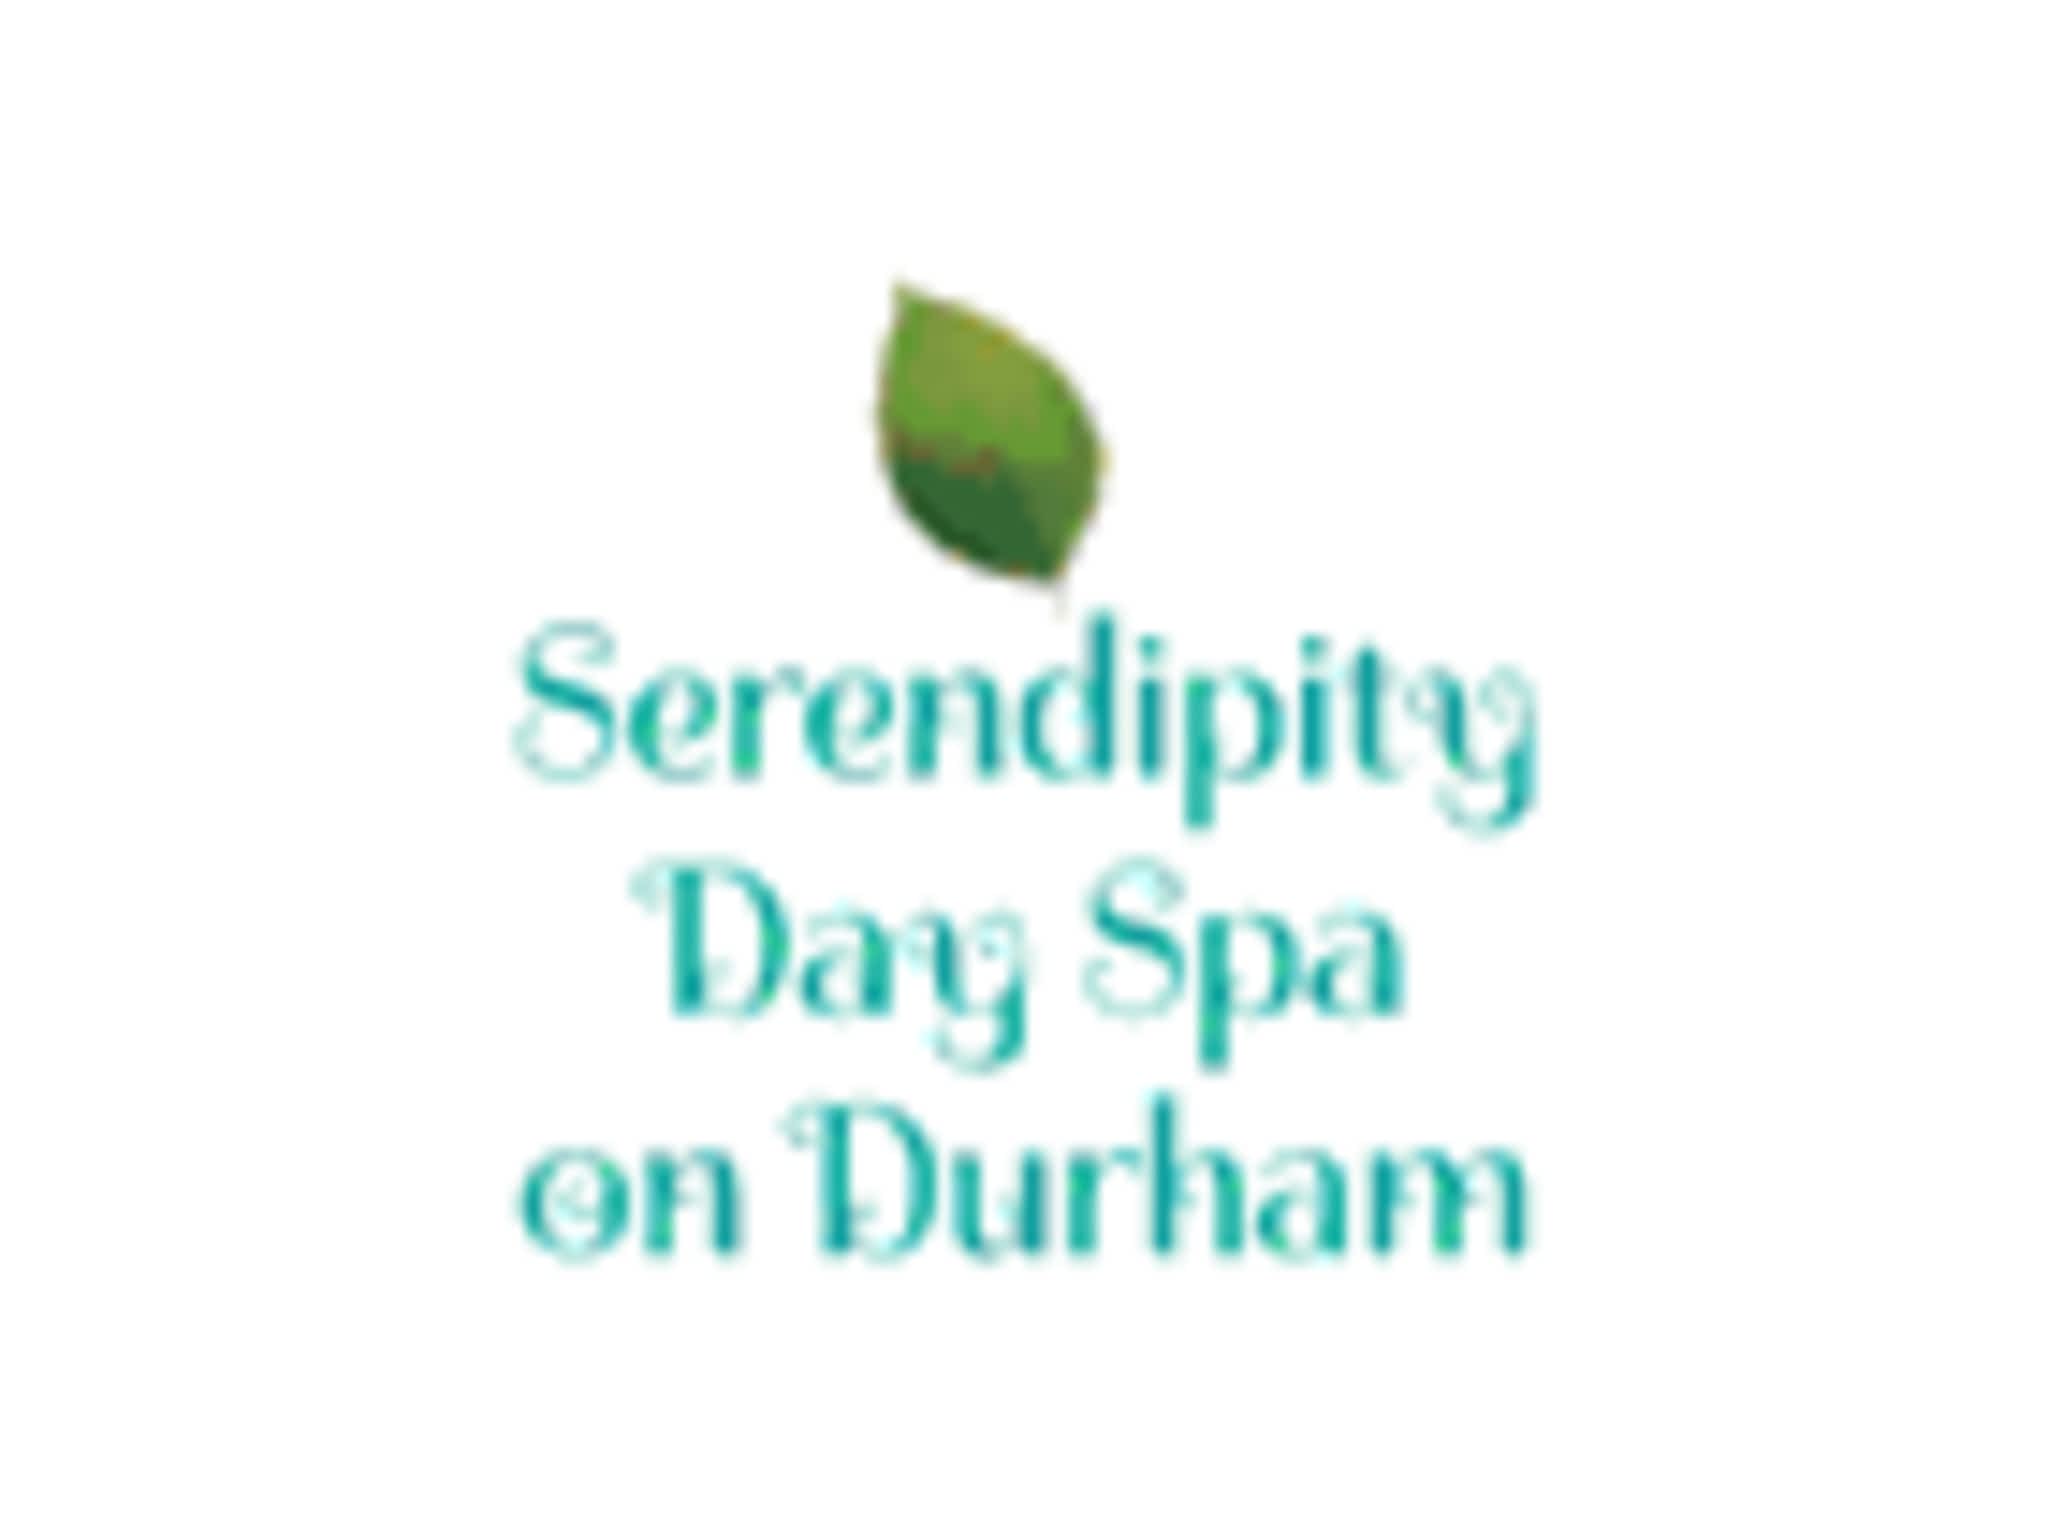 photo Serendipity Day Spa on Durham